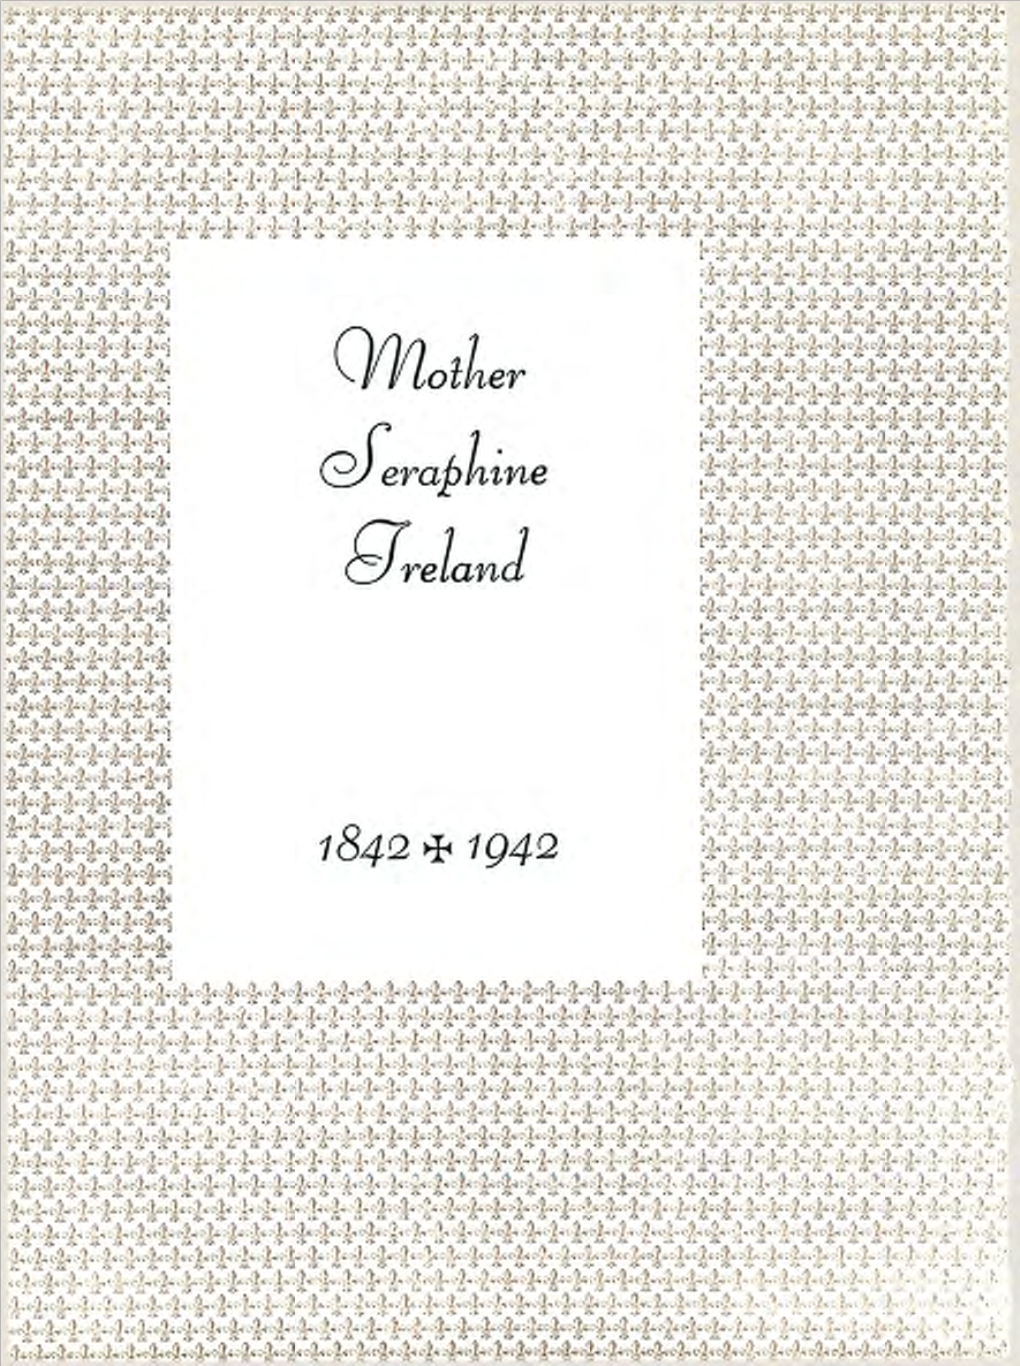 Mother Seraphine Ireland